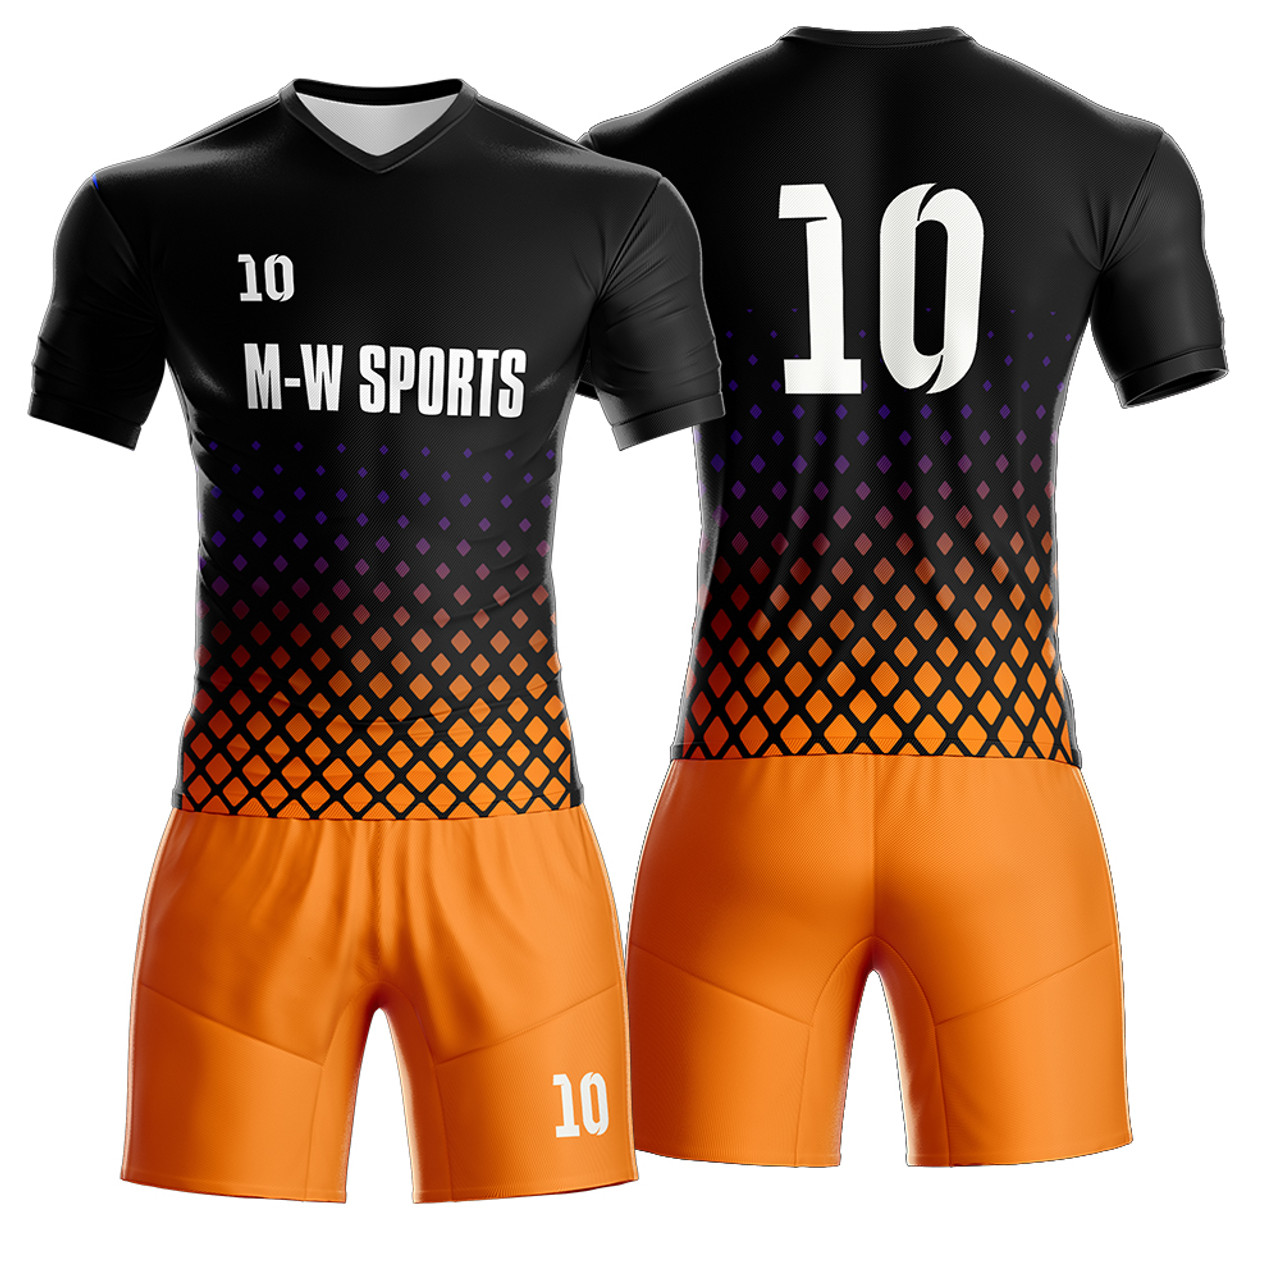 soccer jersey printing